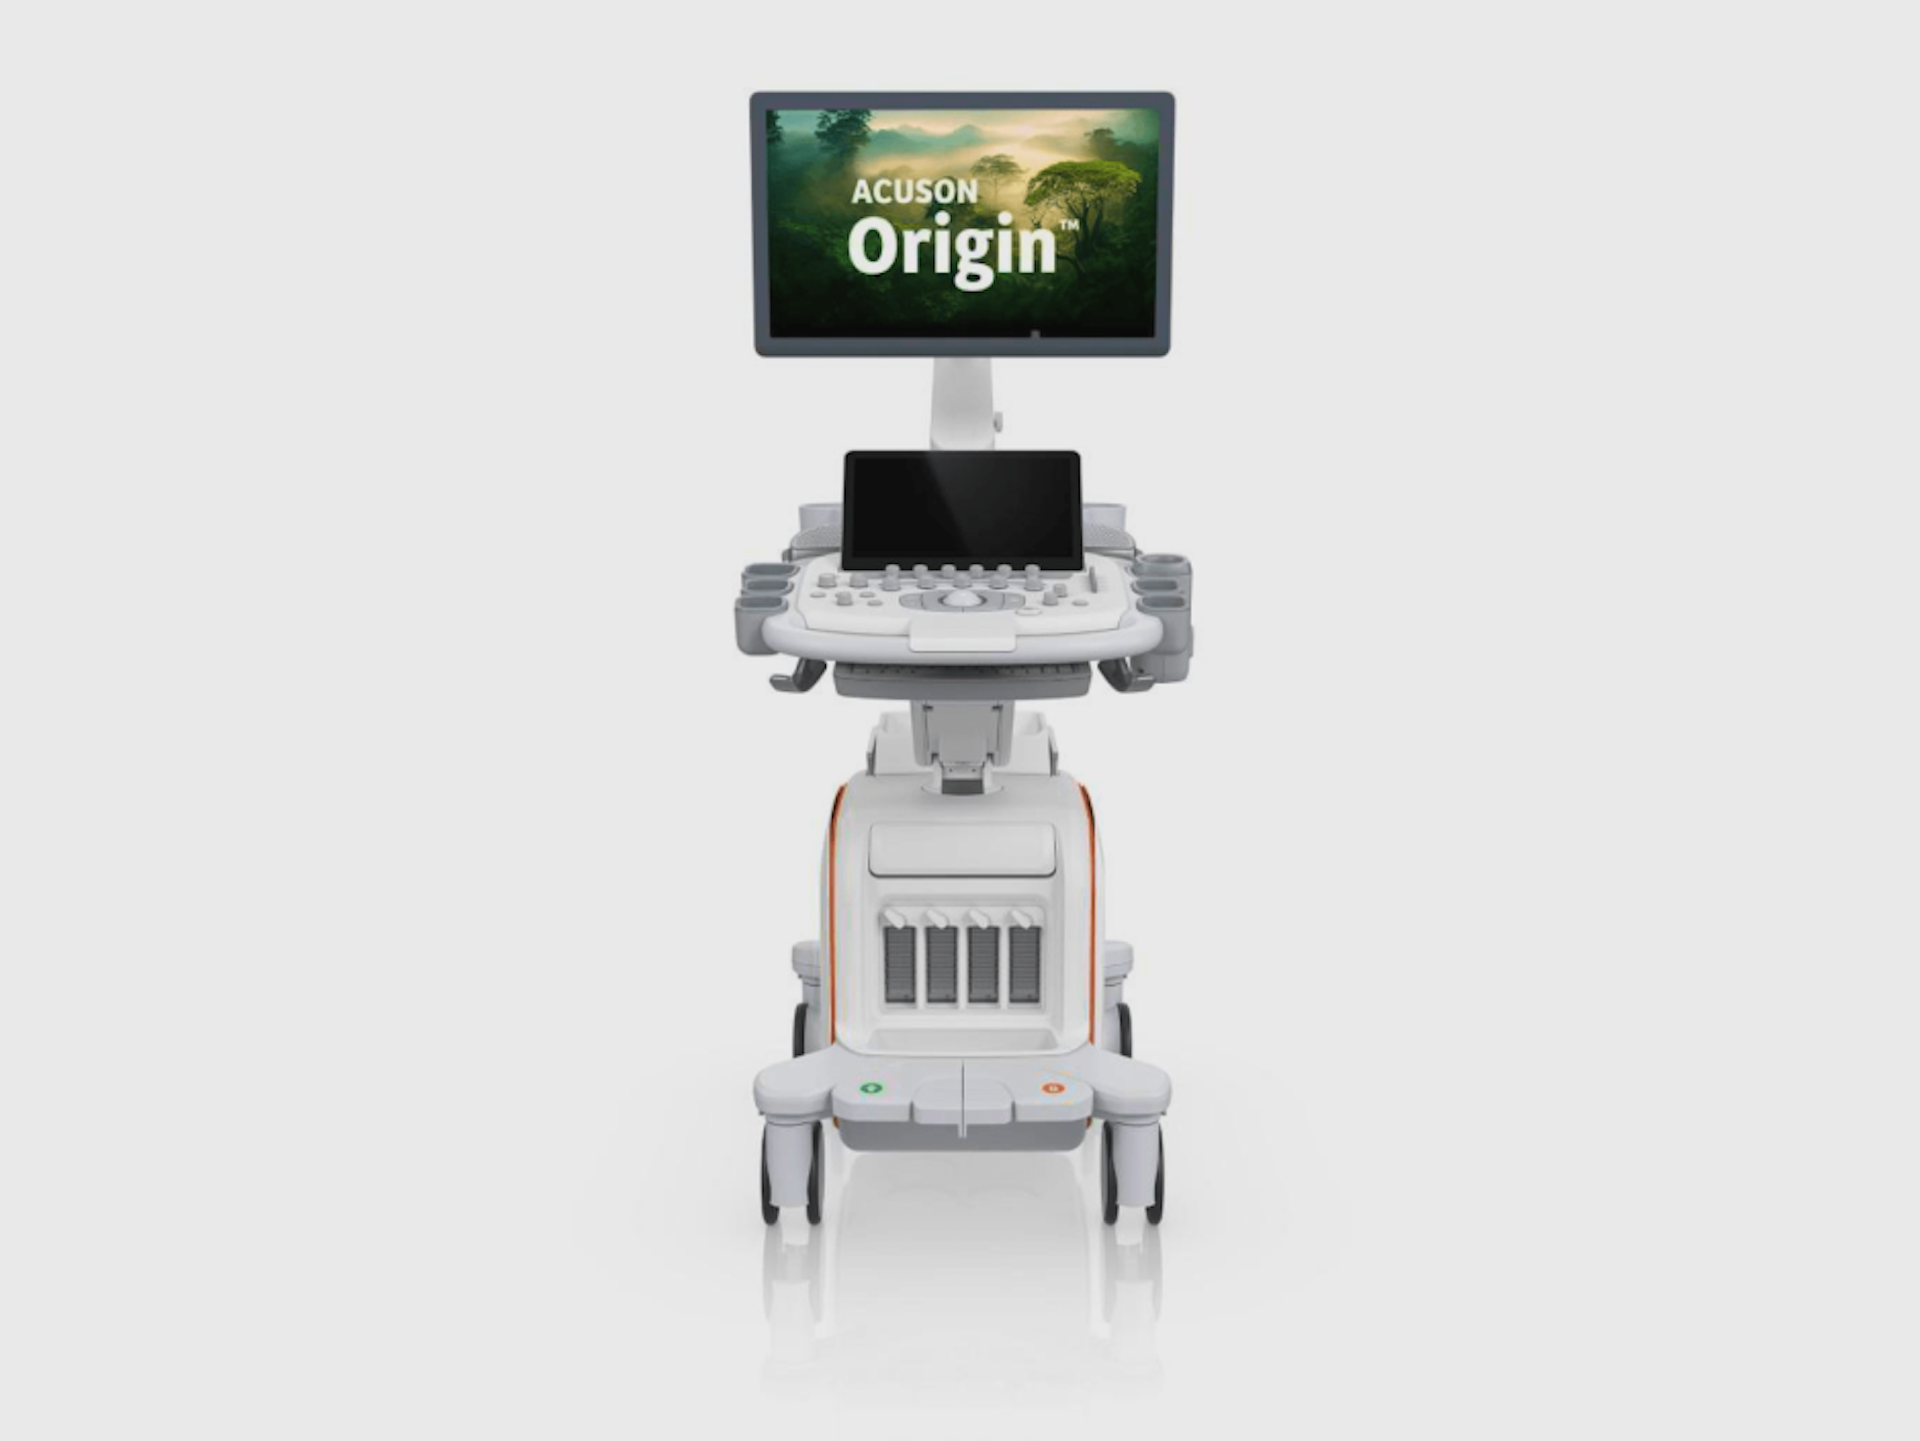 Acuson Origin Ultrasound Machine